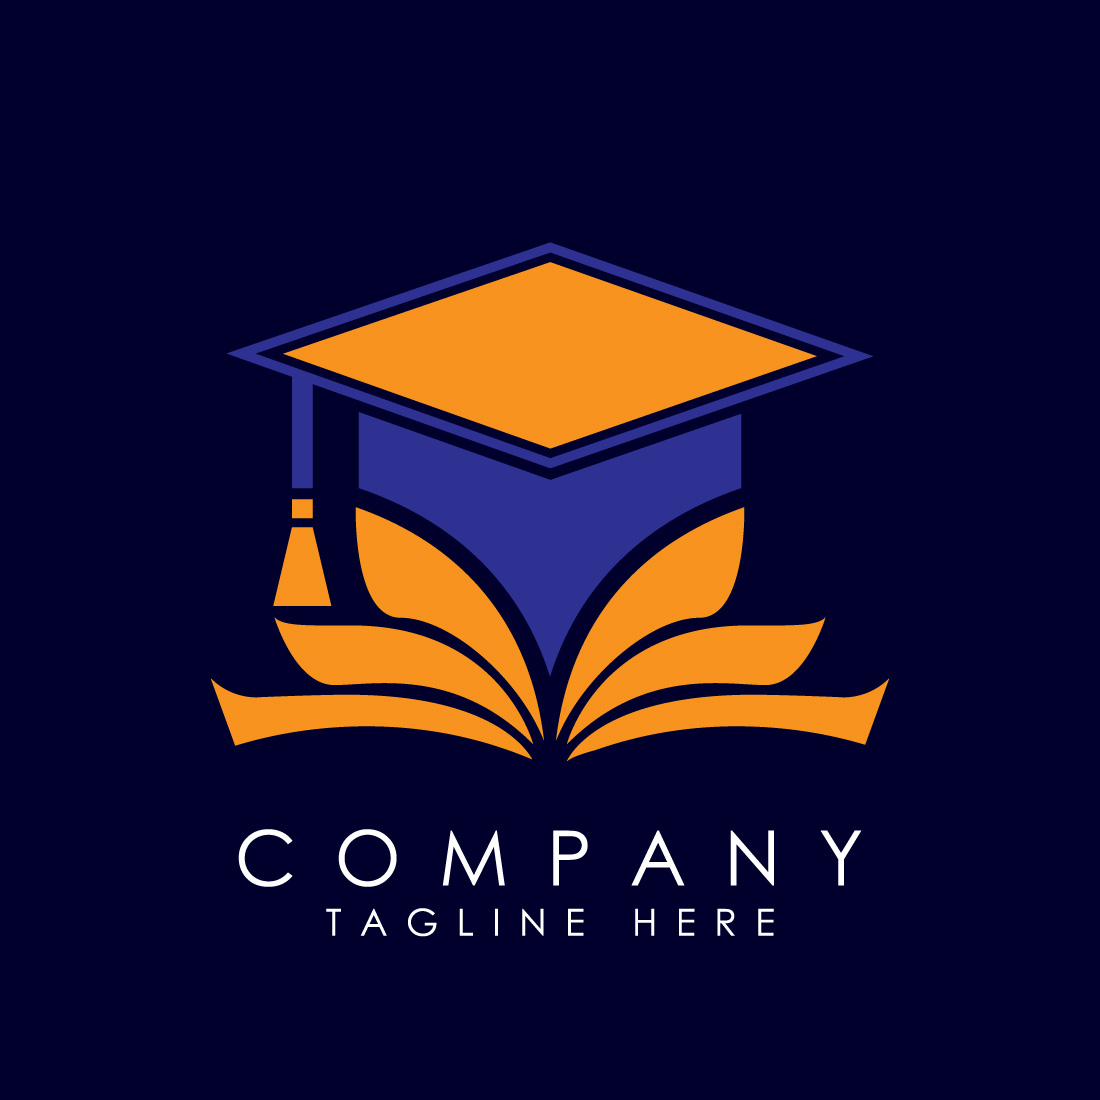 Education logo design vector template, Education and graduation logo vector illustration cover image.